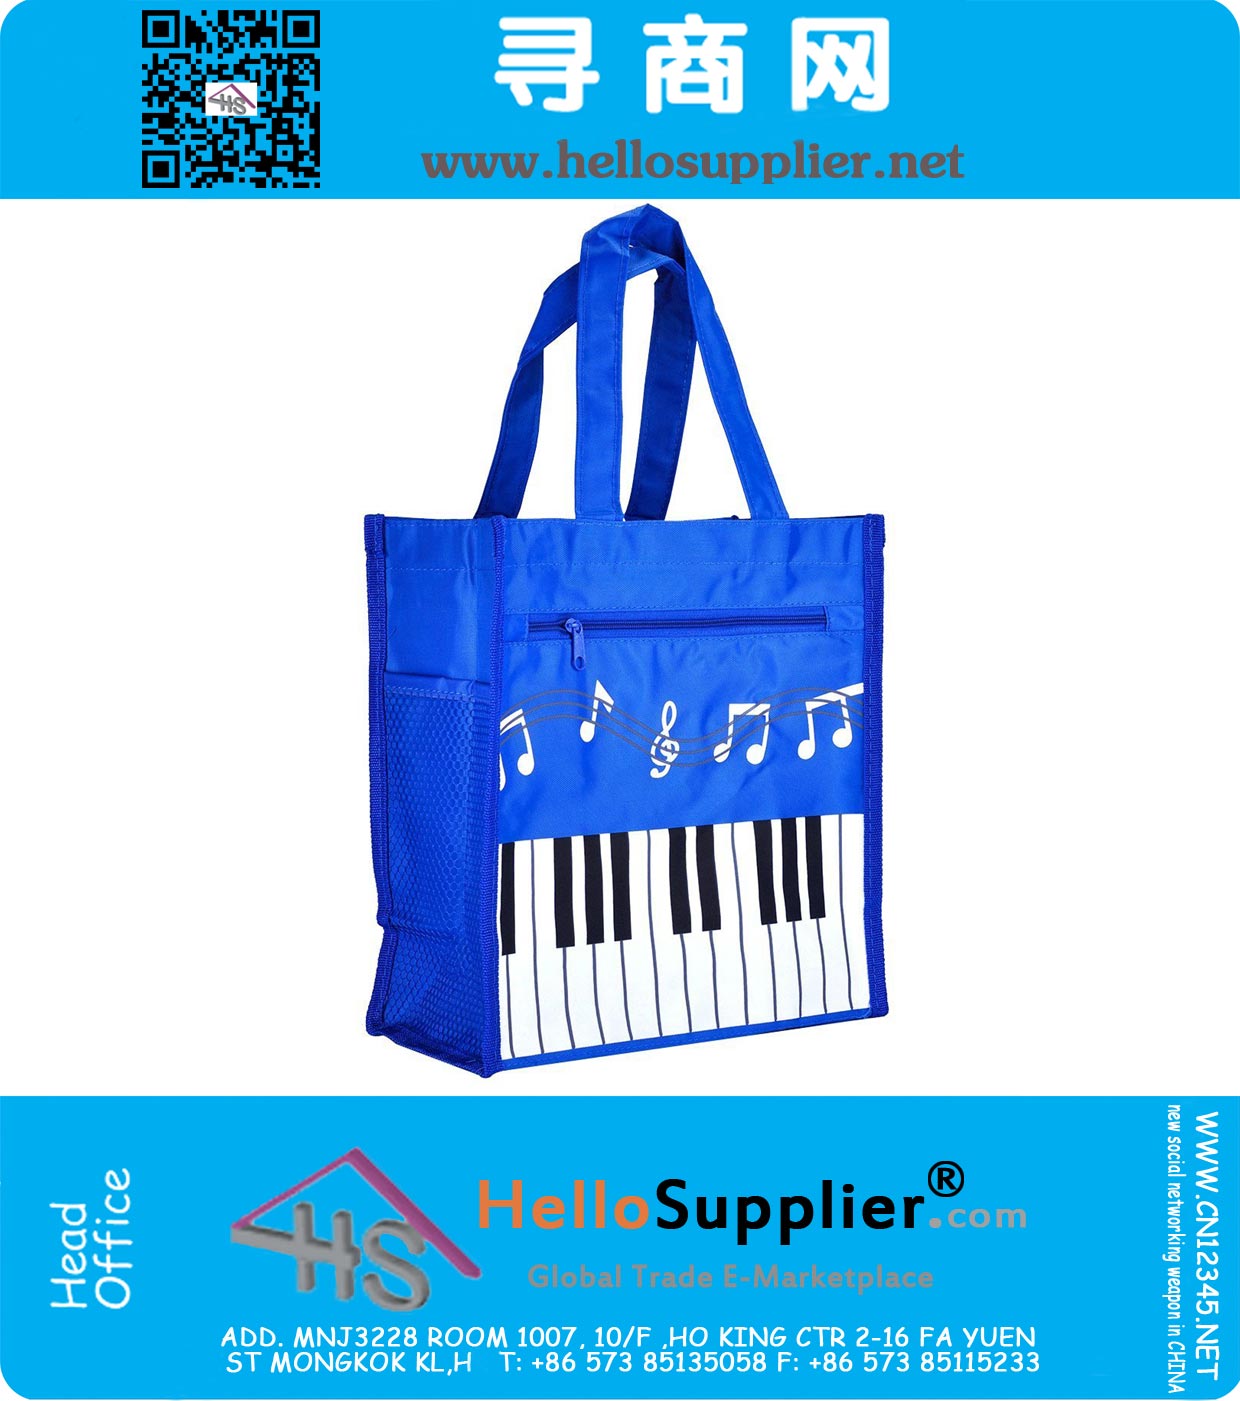 Waterproof Oxford Piano Keys Music Handbag Shoulder Bag Tote Bag Shopping Bag